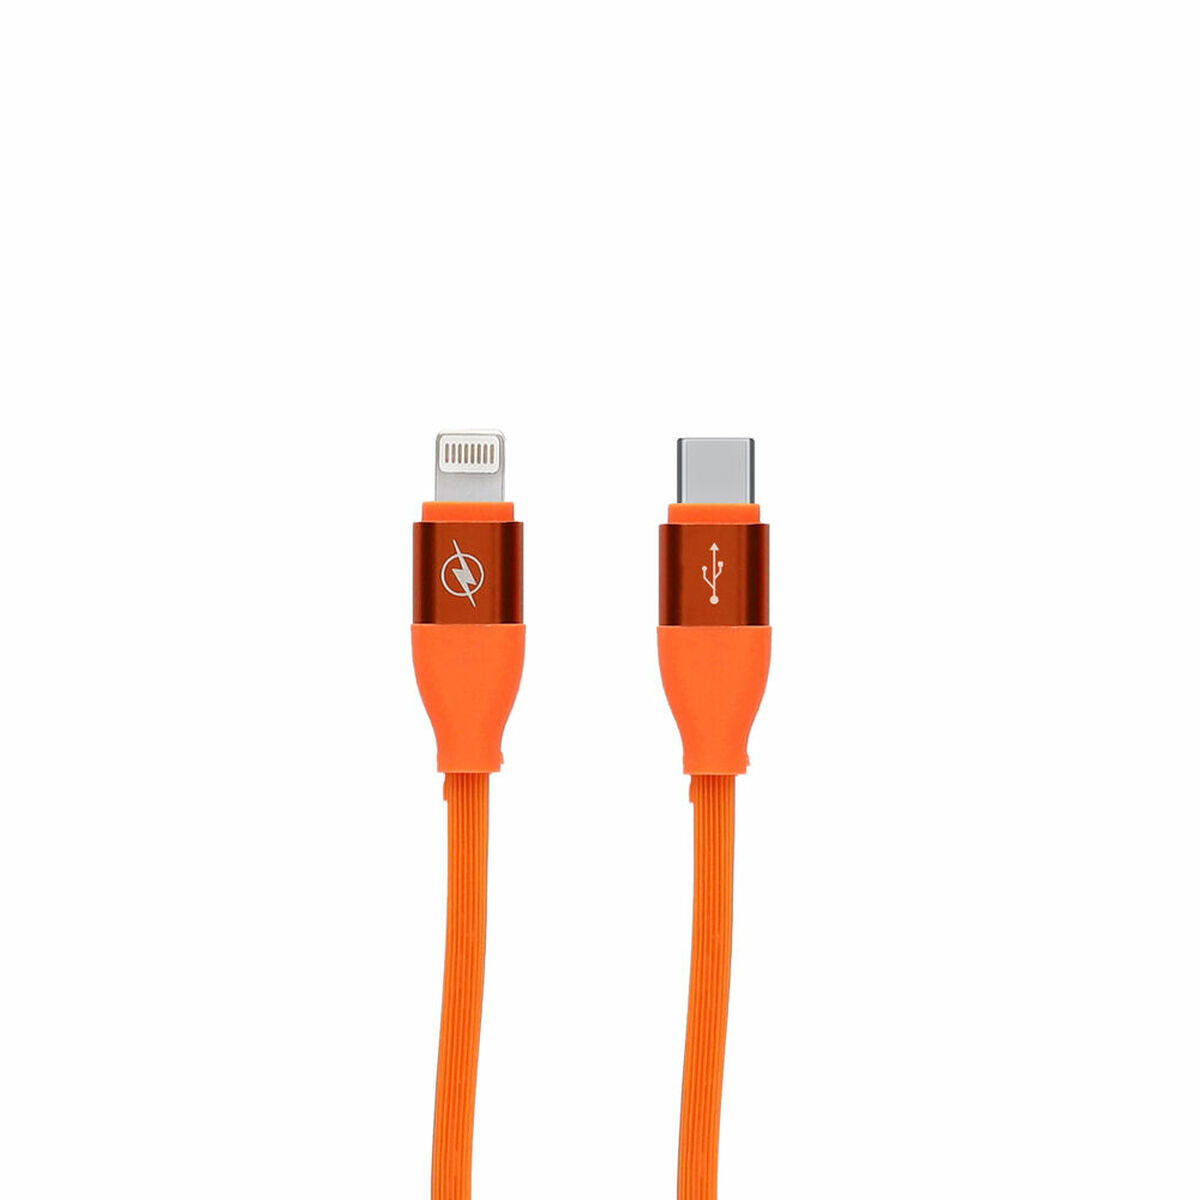 USB -kabel for iPad/iPhone -kontakt